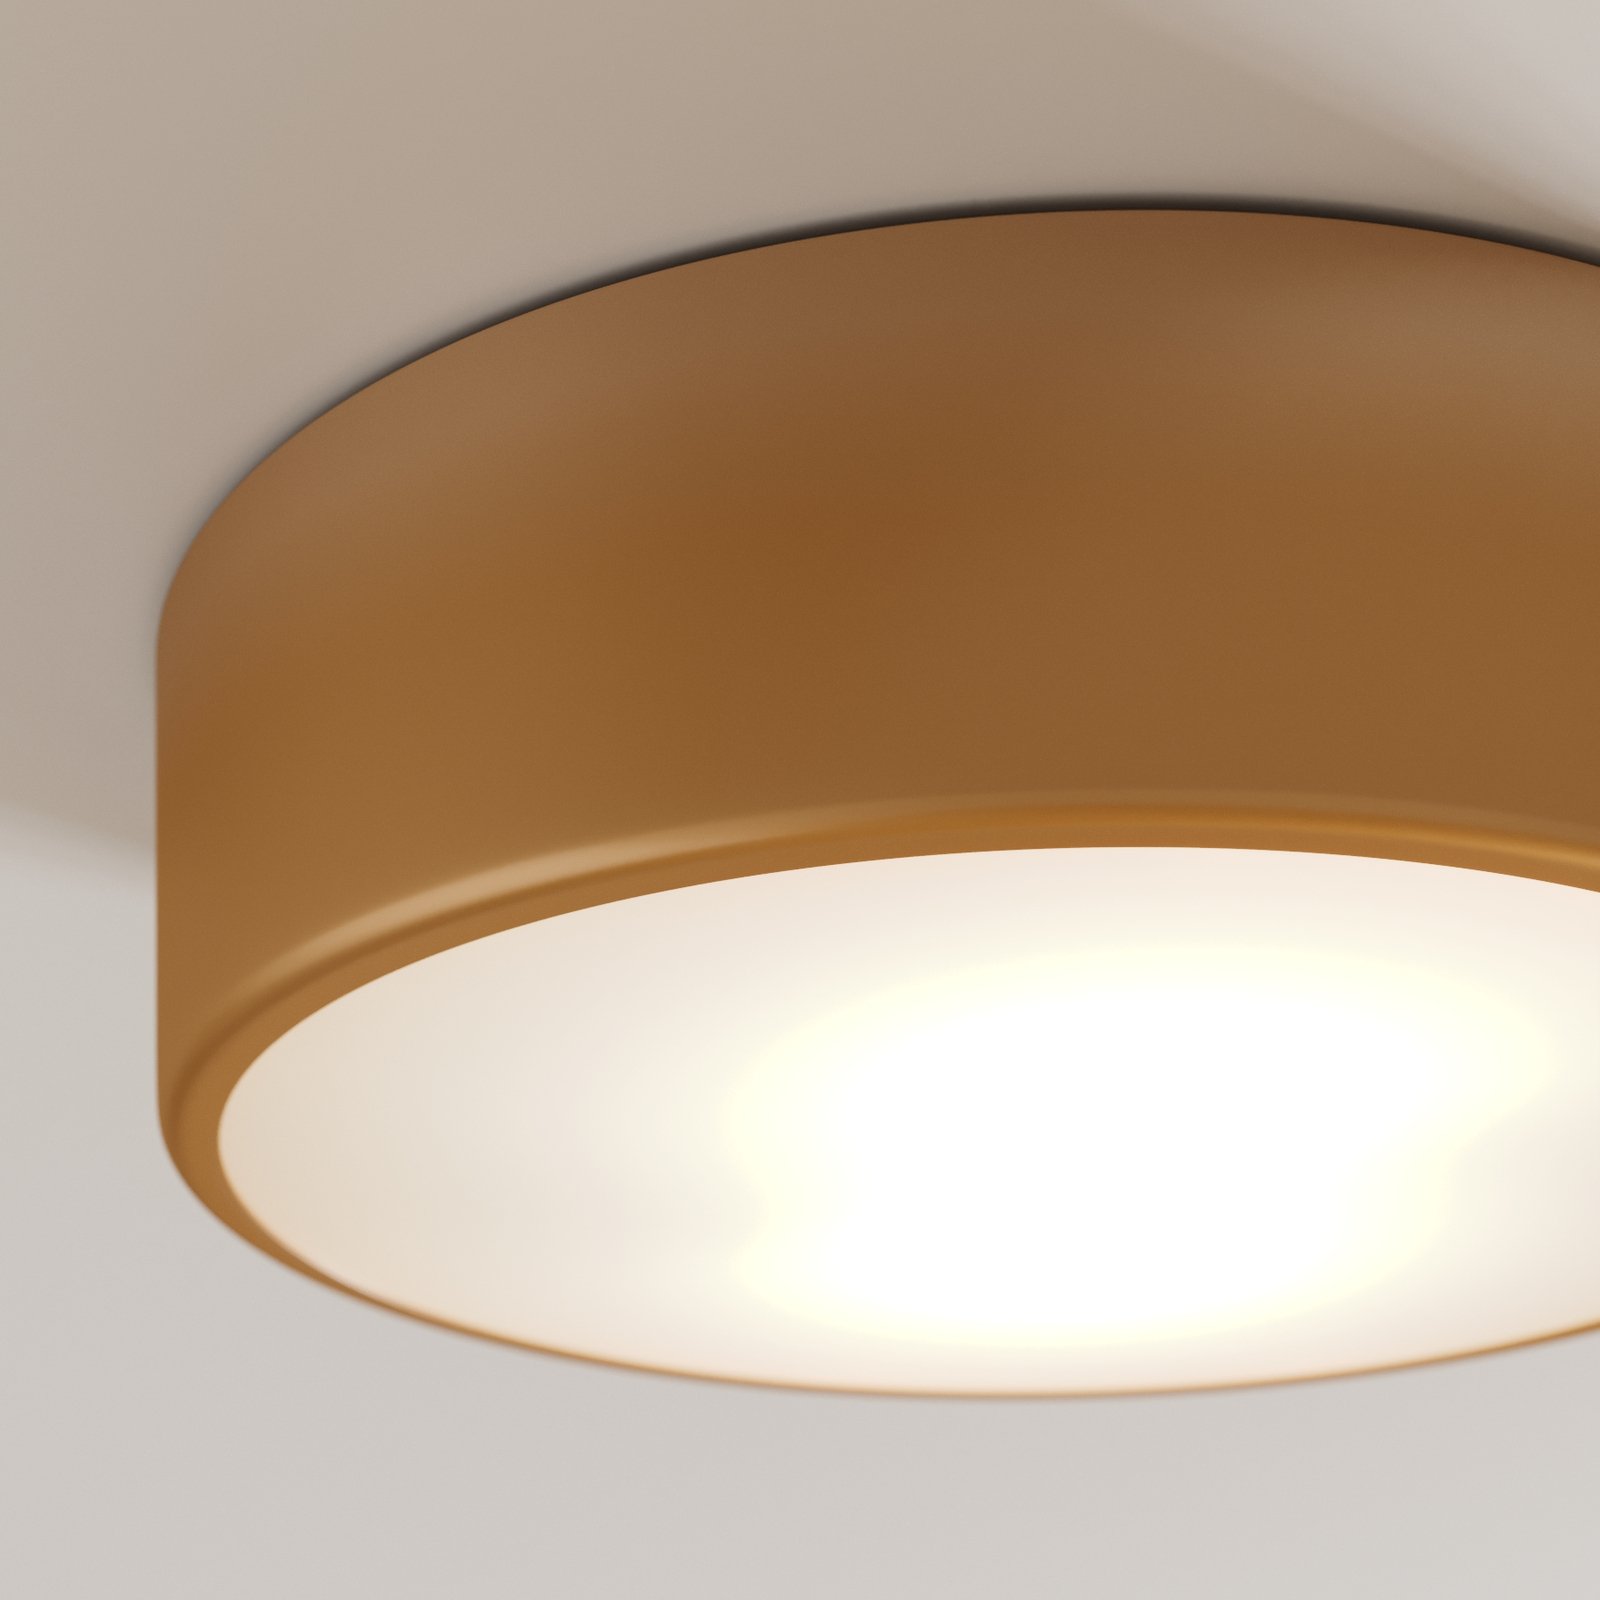 Cleo ceiling light, Ø 30 cm, gold